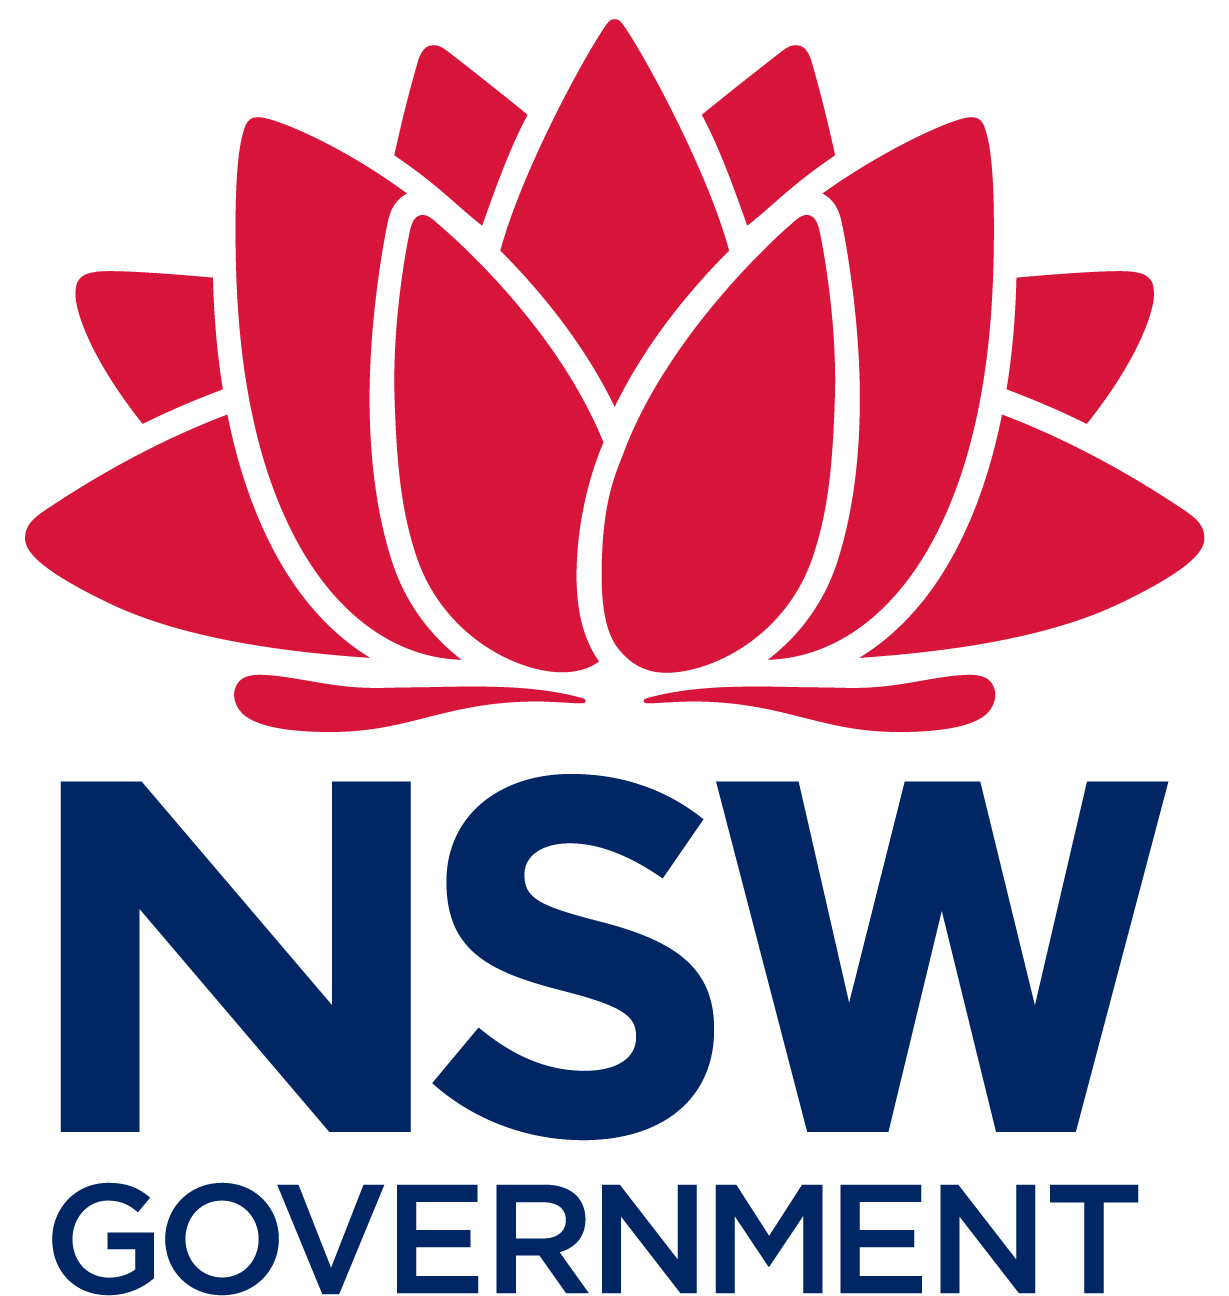 resourcesandenergy-nsw-gov-au-apply-for-family-energy-rebate-new